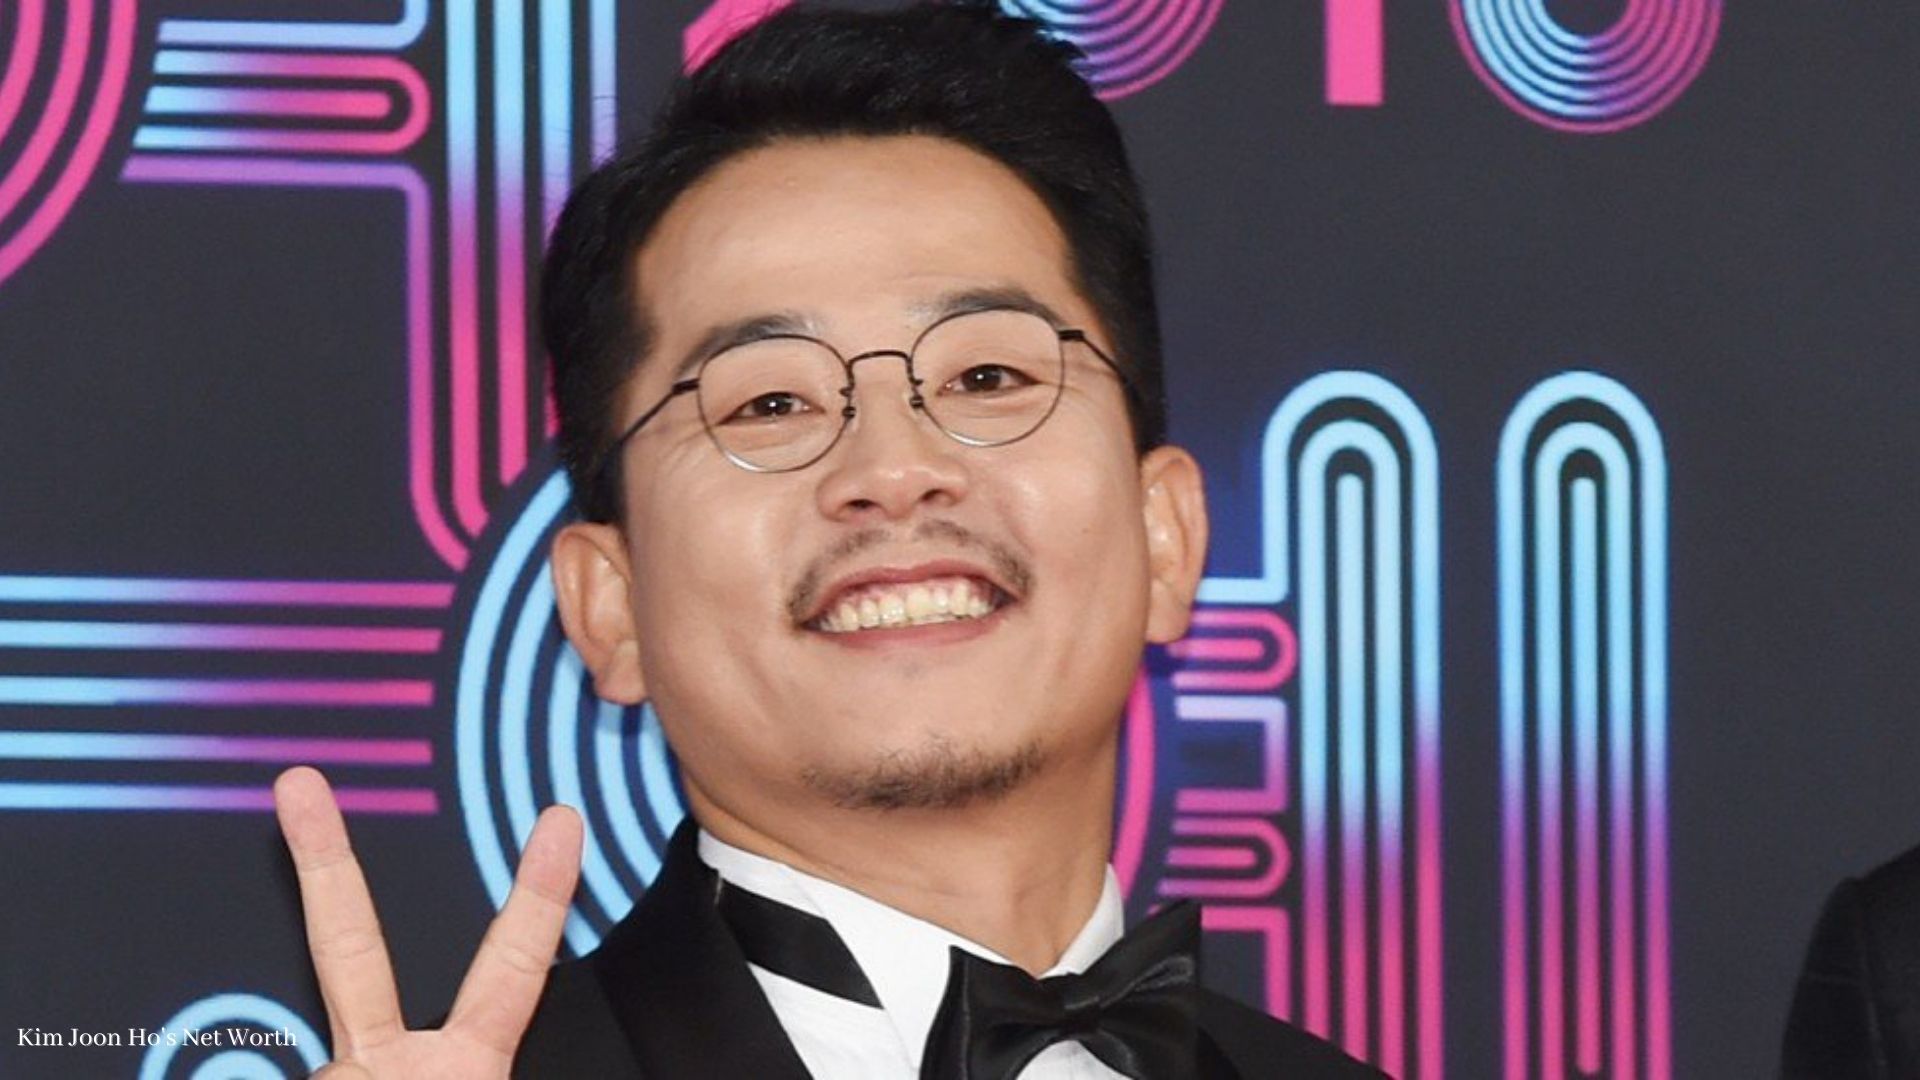 Kim Jun Ho’s Net Worth: How Rich Is the South Korean Comedian?